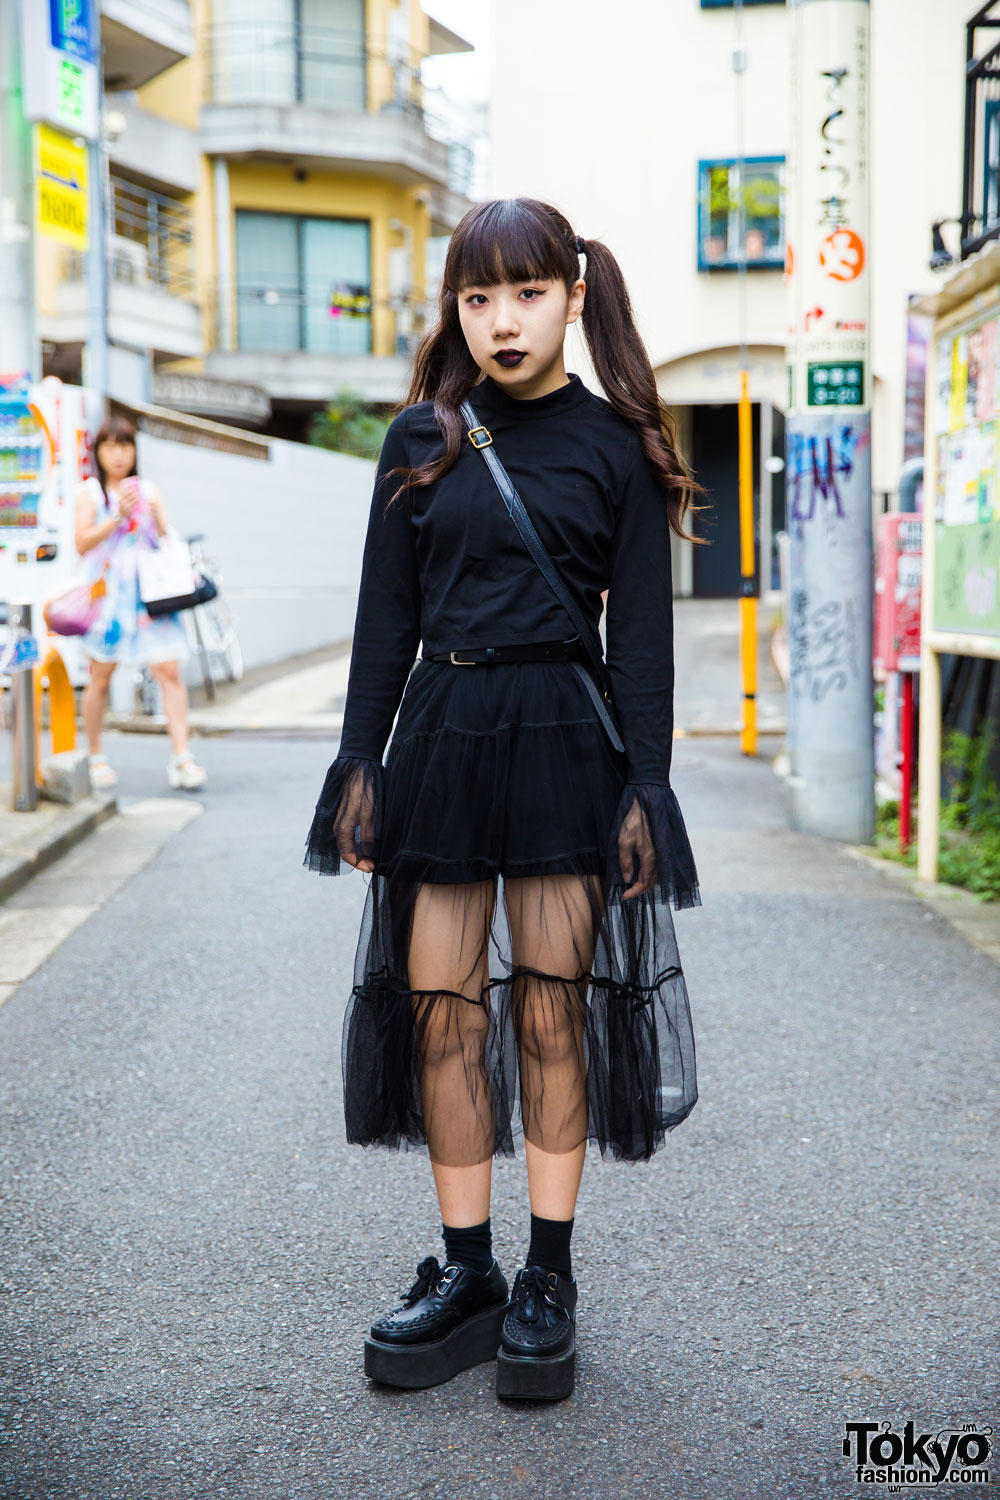 Harajuku Girl in Dark Streetwear w/ Nadia Sheer Skirt & Platform Creepers